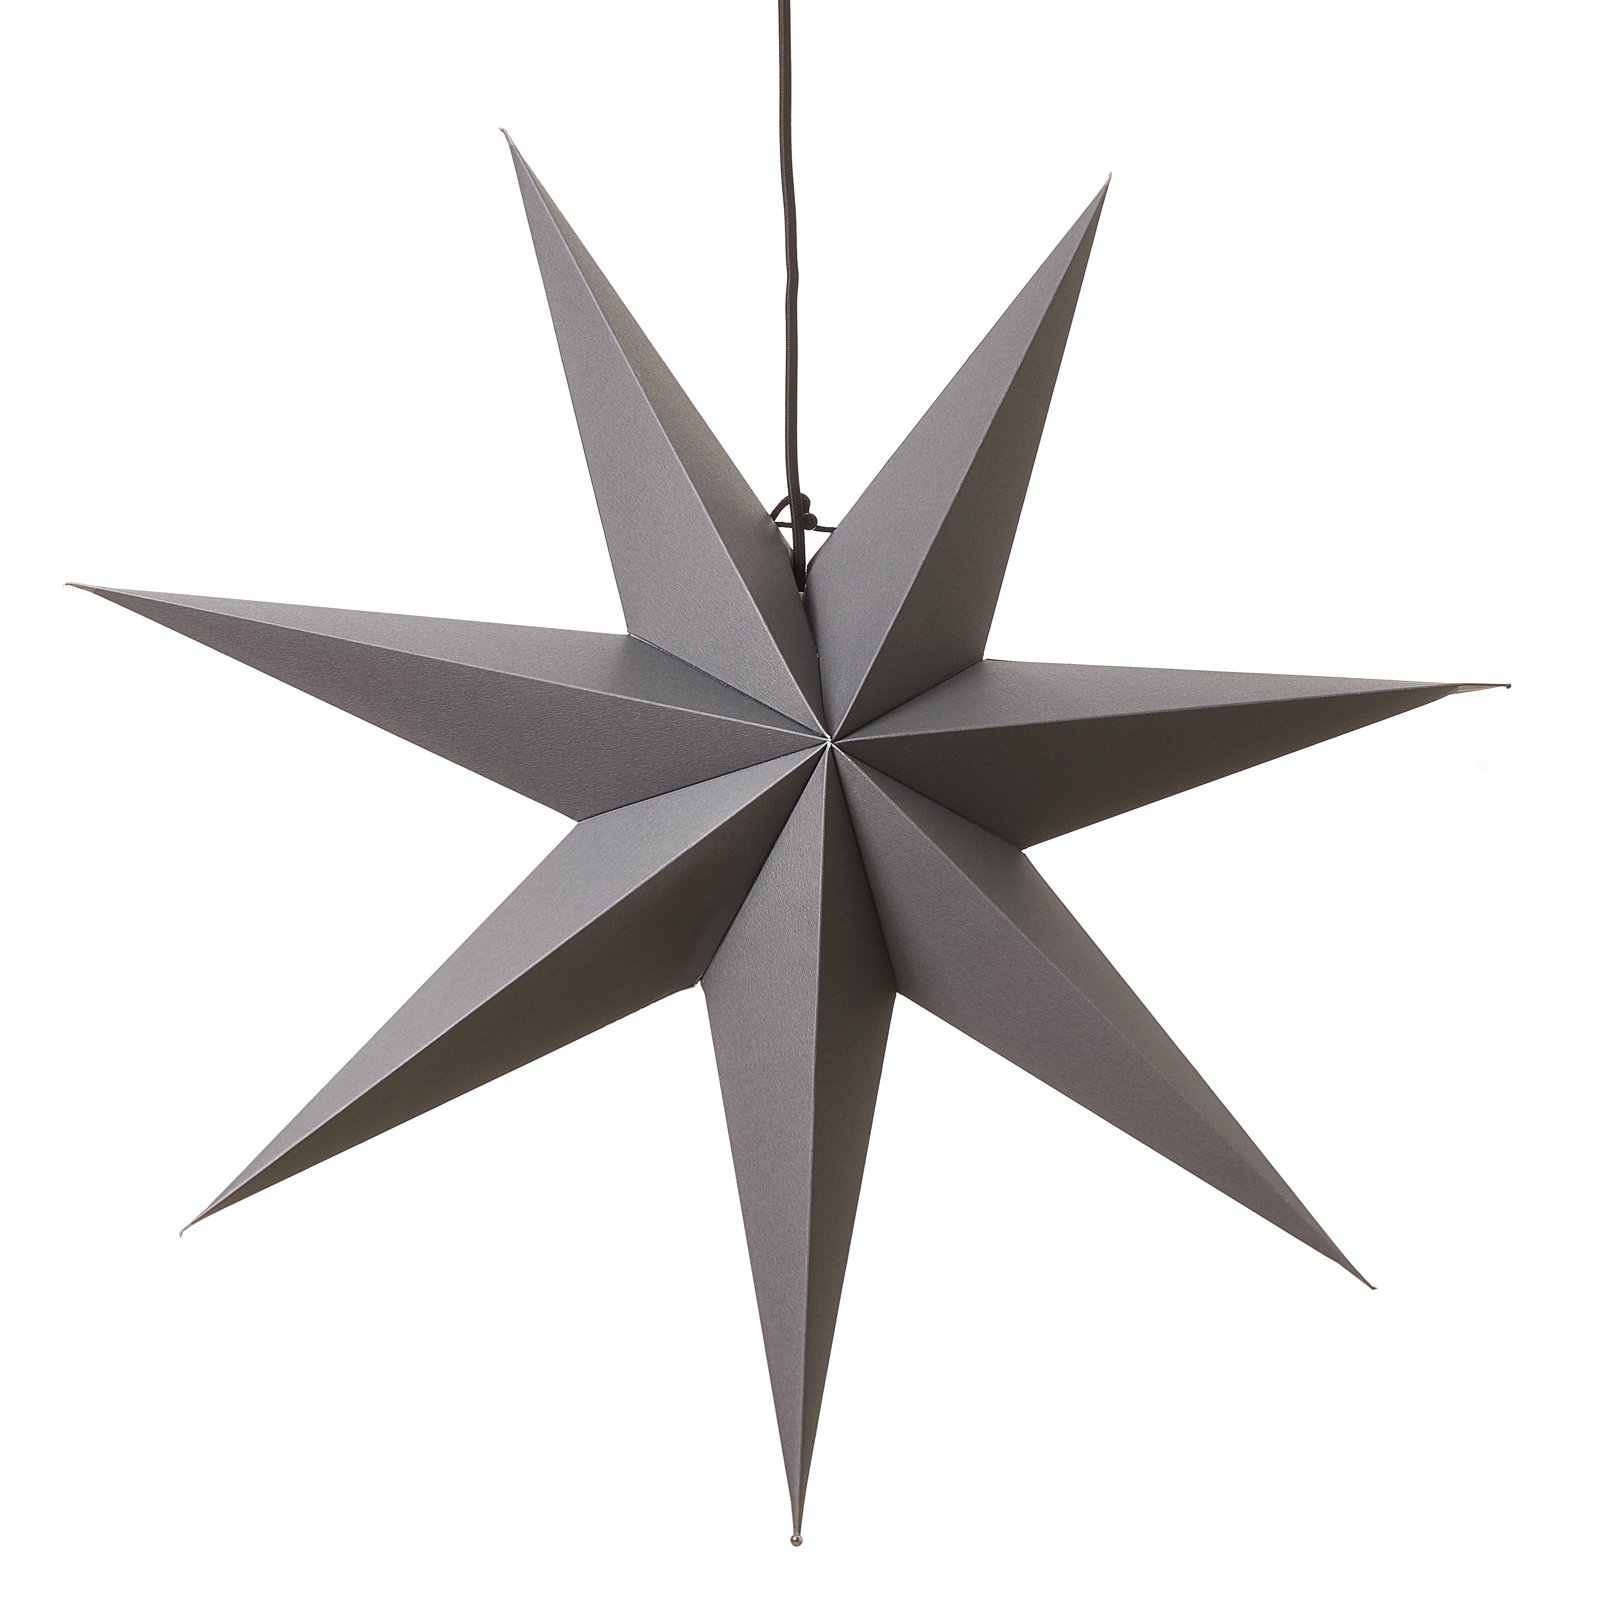 Ozen seven-pointed paper star, 70 cm diameter